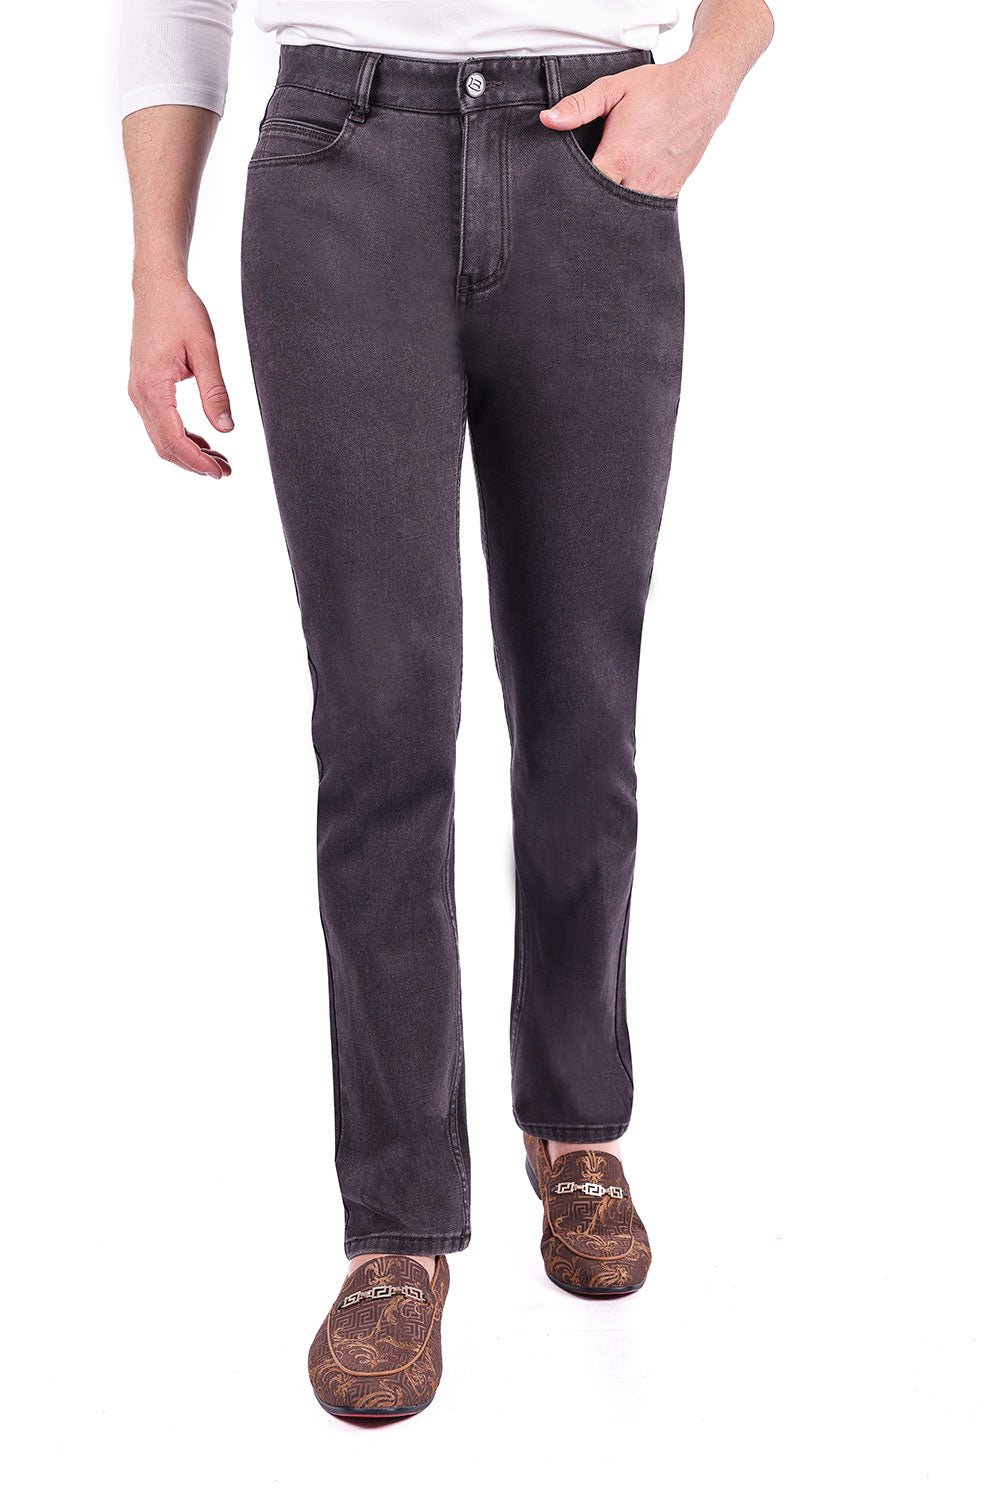 Barabas Men's Solid Color Premium Stretch Denim Jeans 3SN100 Plum